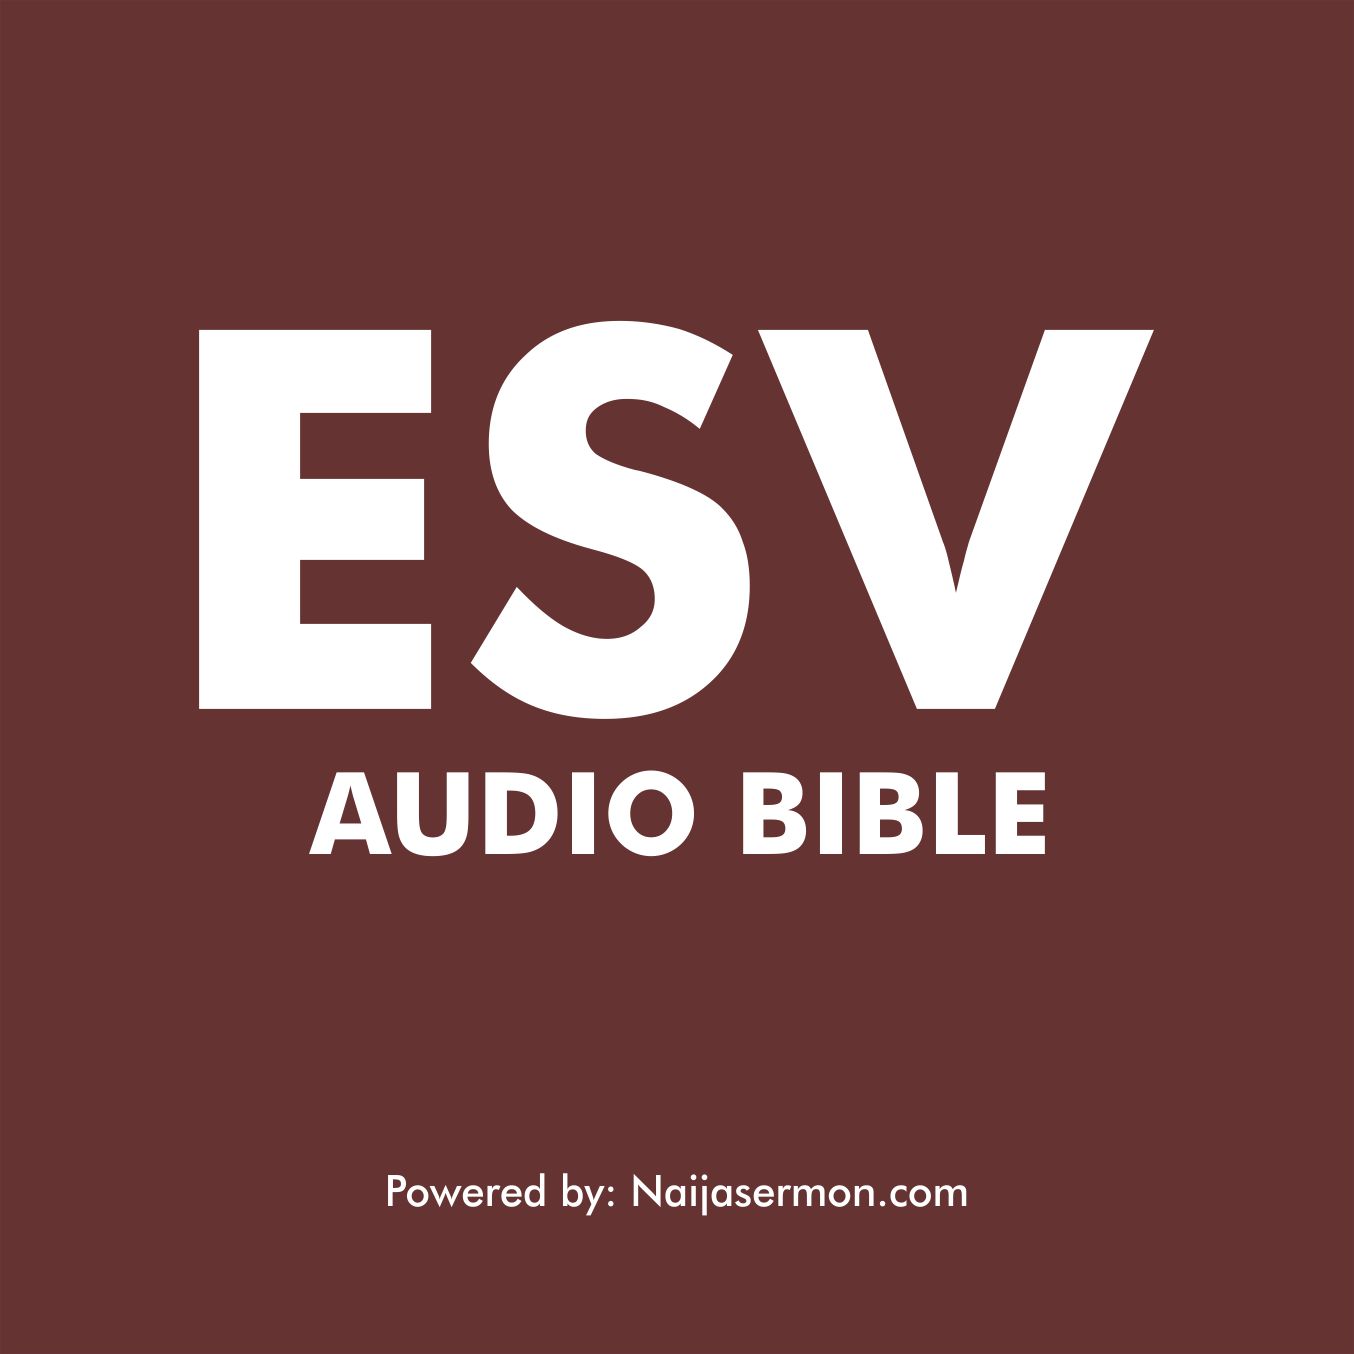 [Free] Download English Standard Version (ESV) Audio Bible MP3 - Dramatized 10